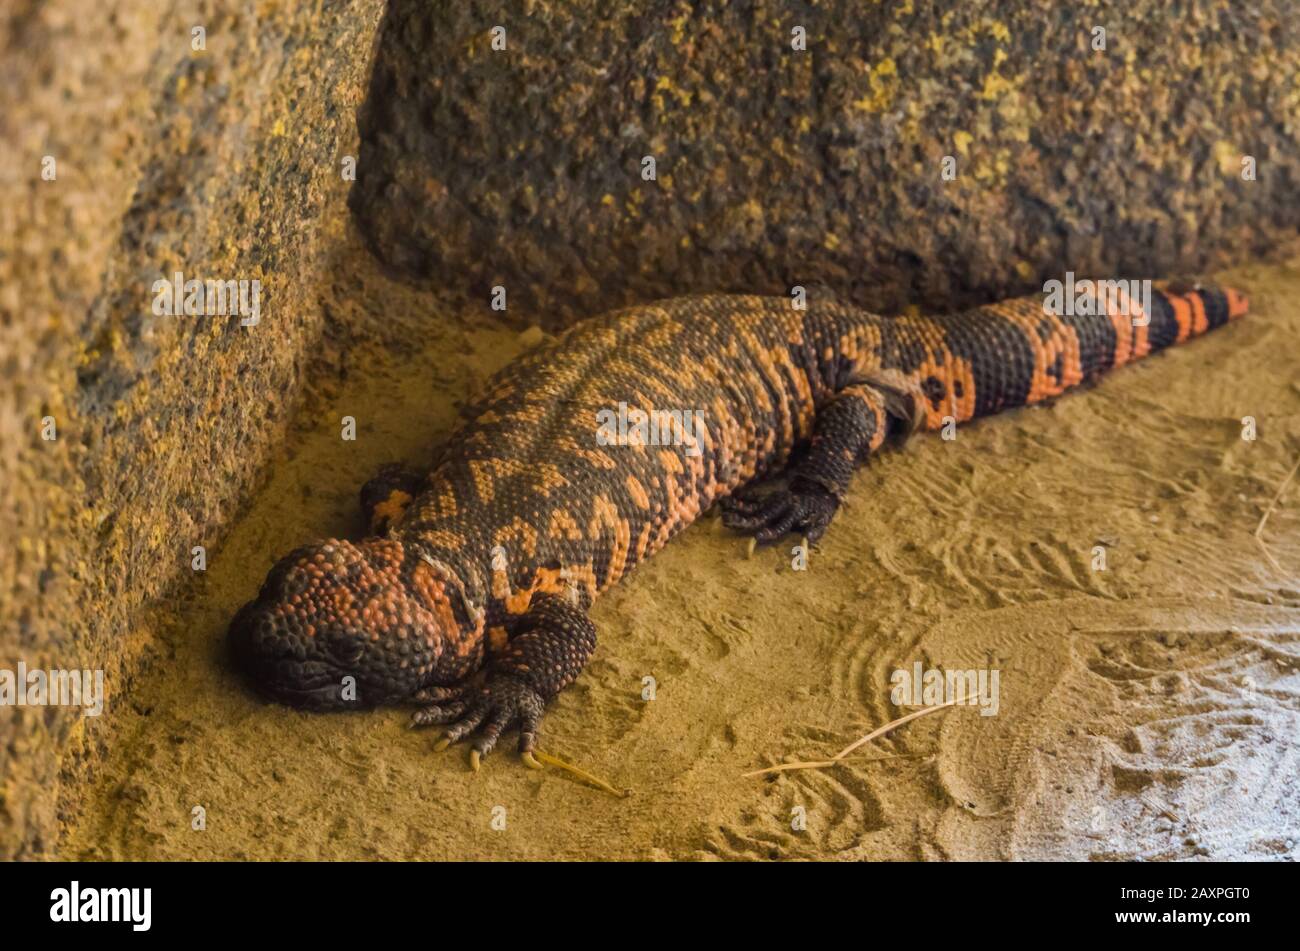 closeup of a gila monster, venomous lizard from the desert of America, Tropical reptile specie Stock Photo